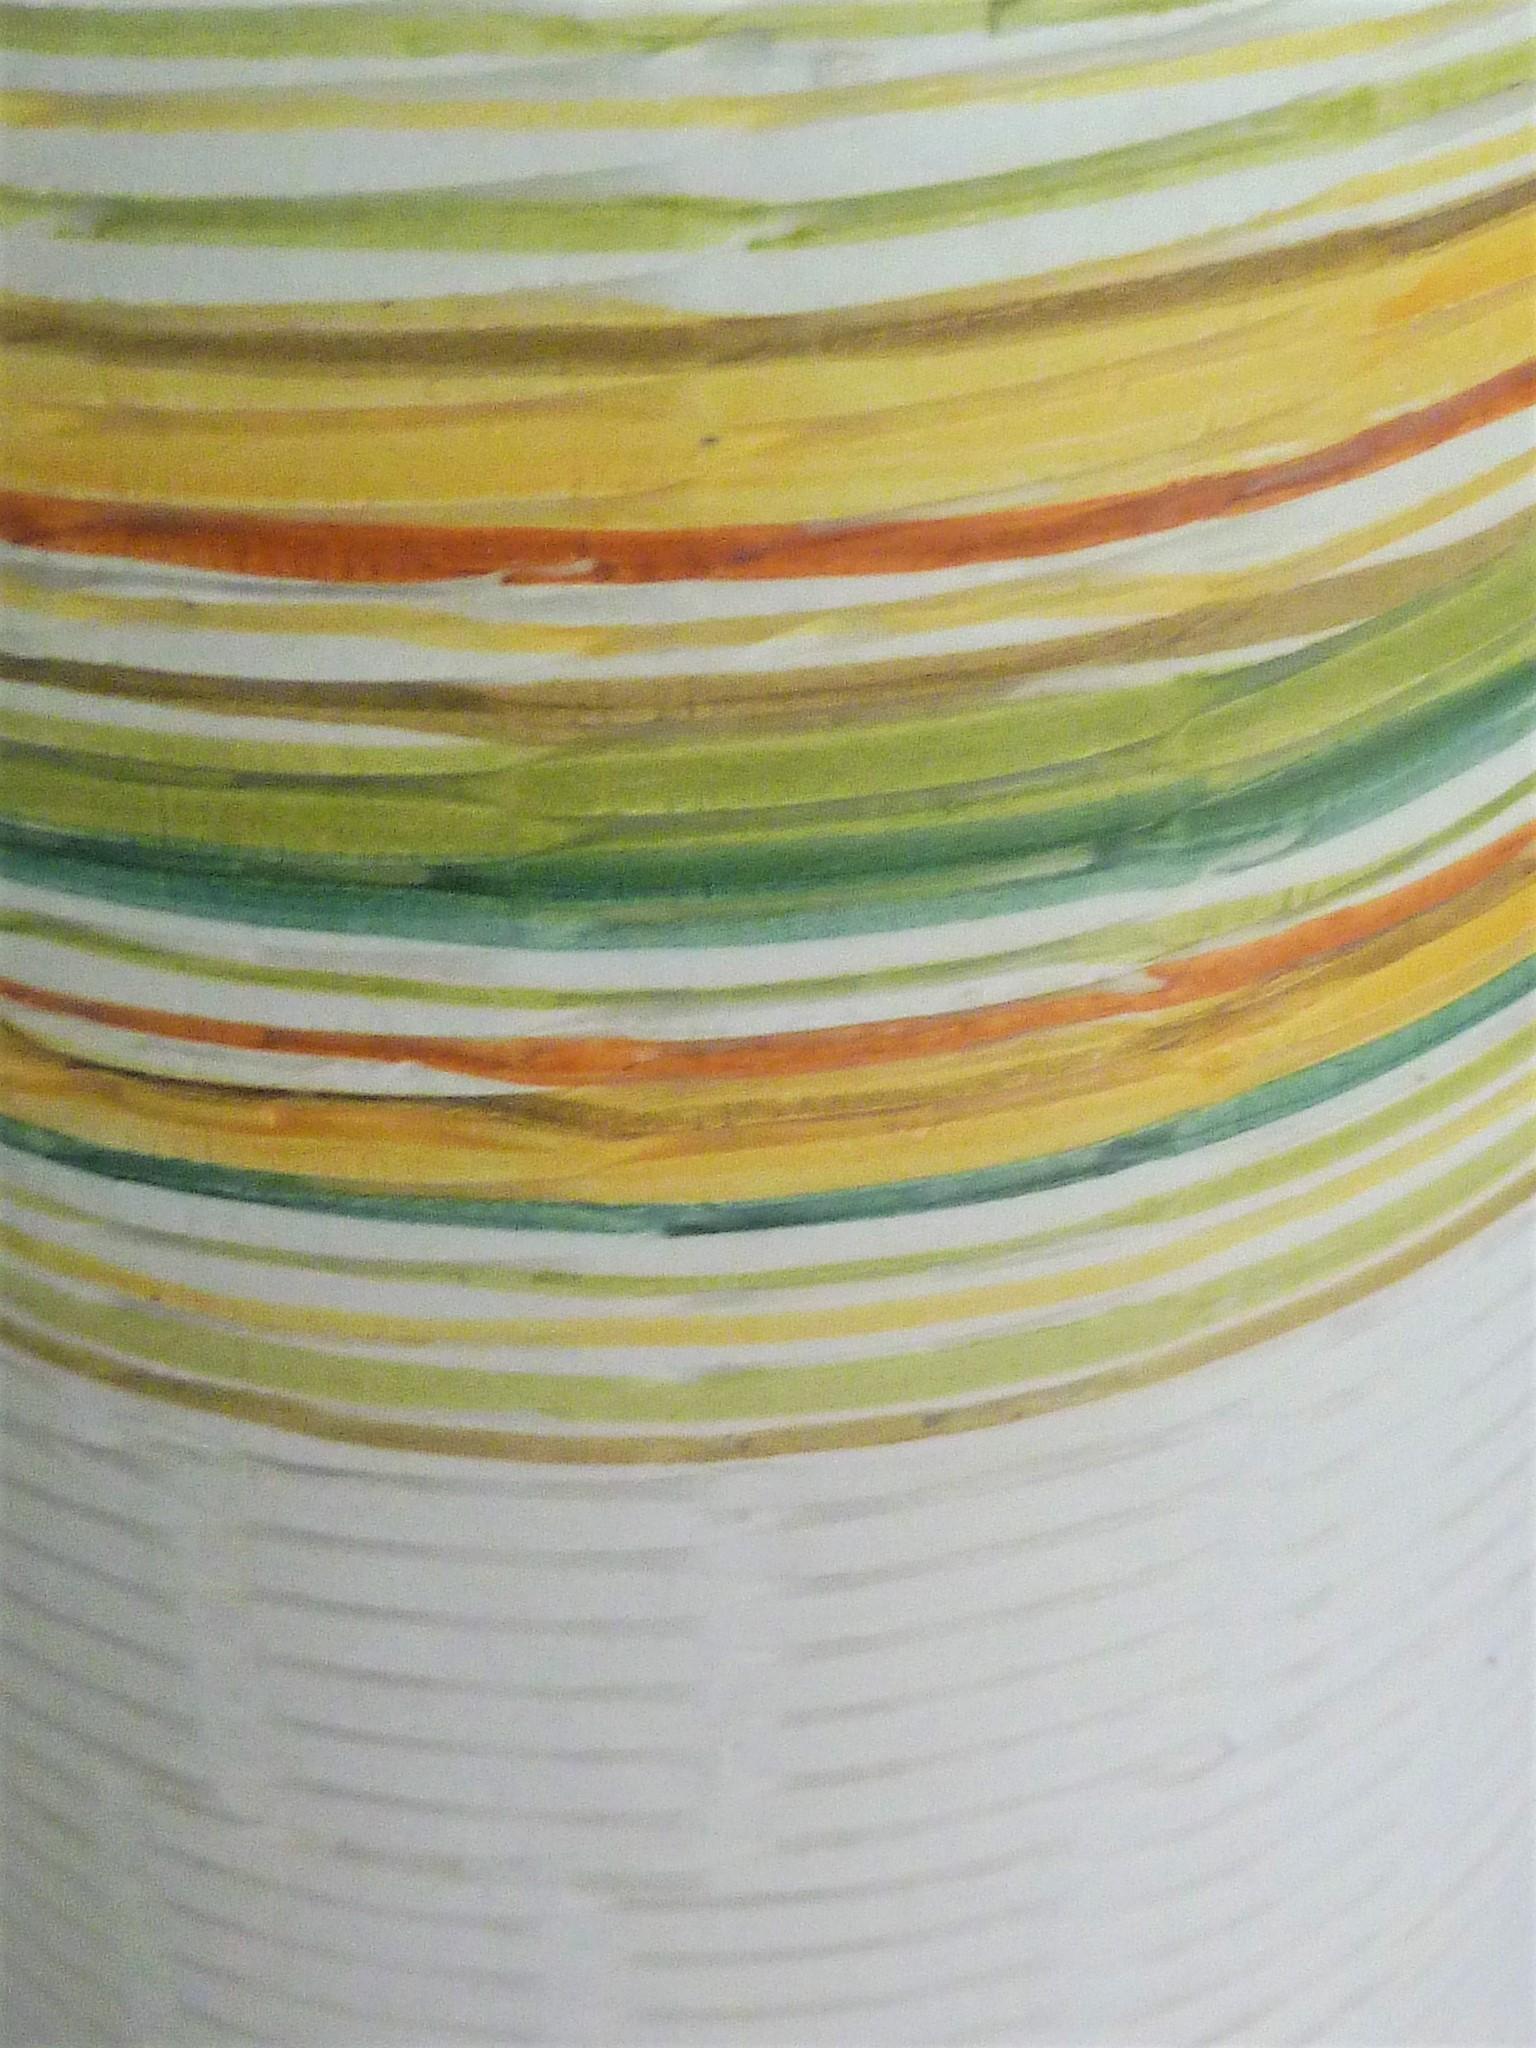 Mid-Century Modern Organic Modern Raymor Bitossi Textured Londi Attributed Pottery Vase 1960s Italy